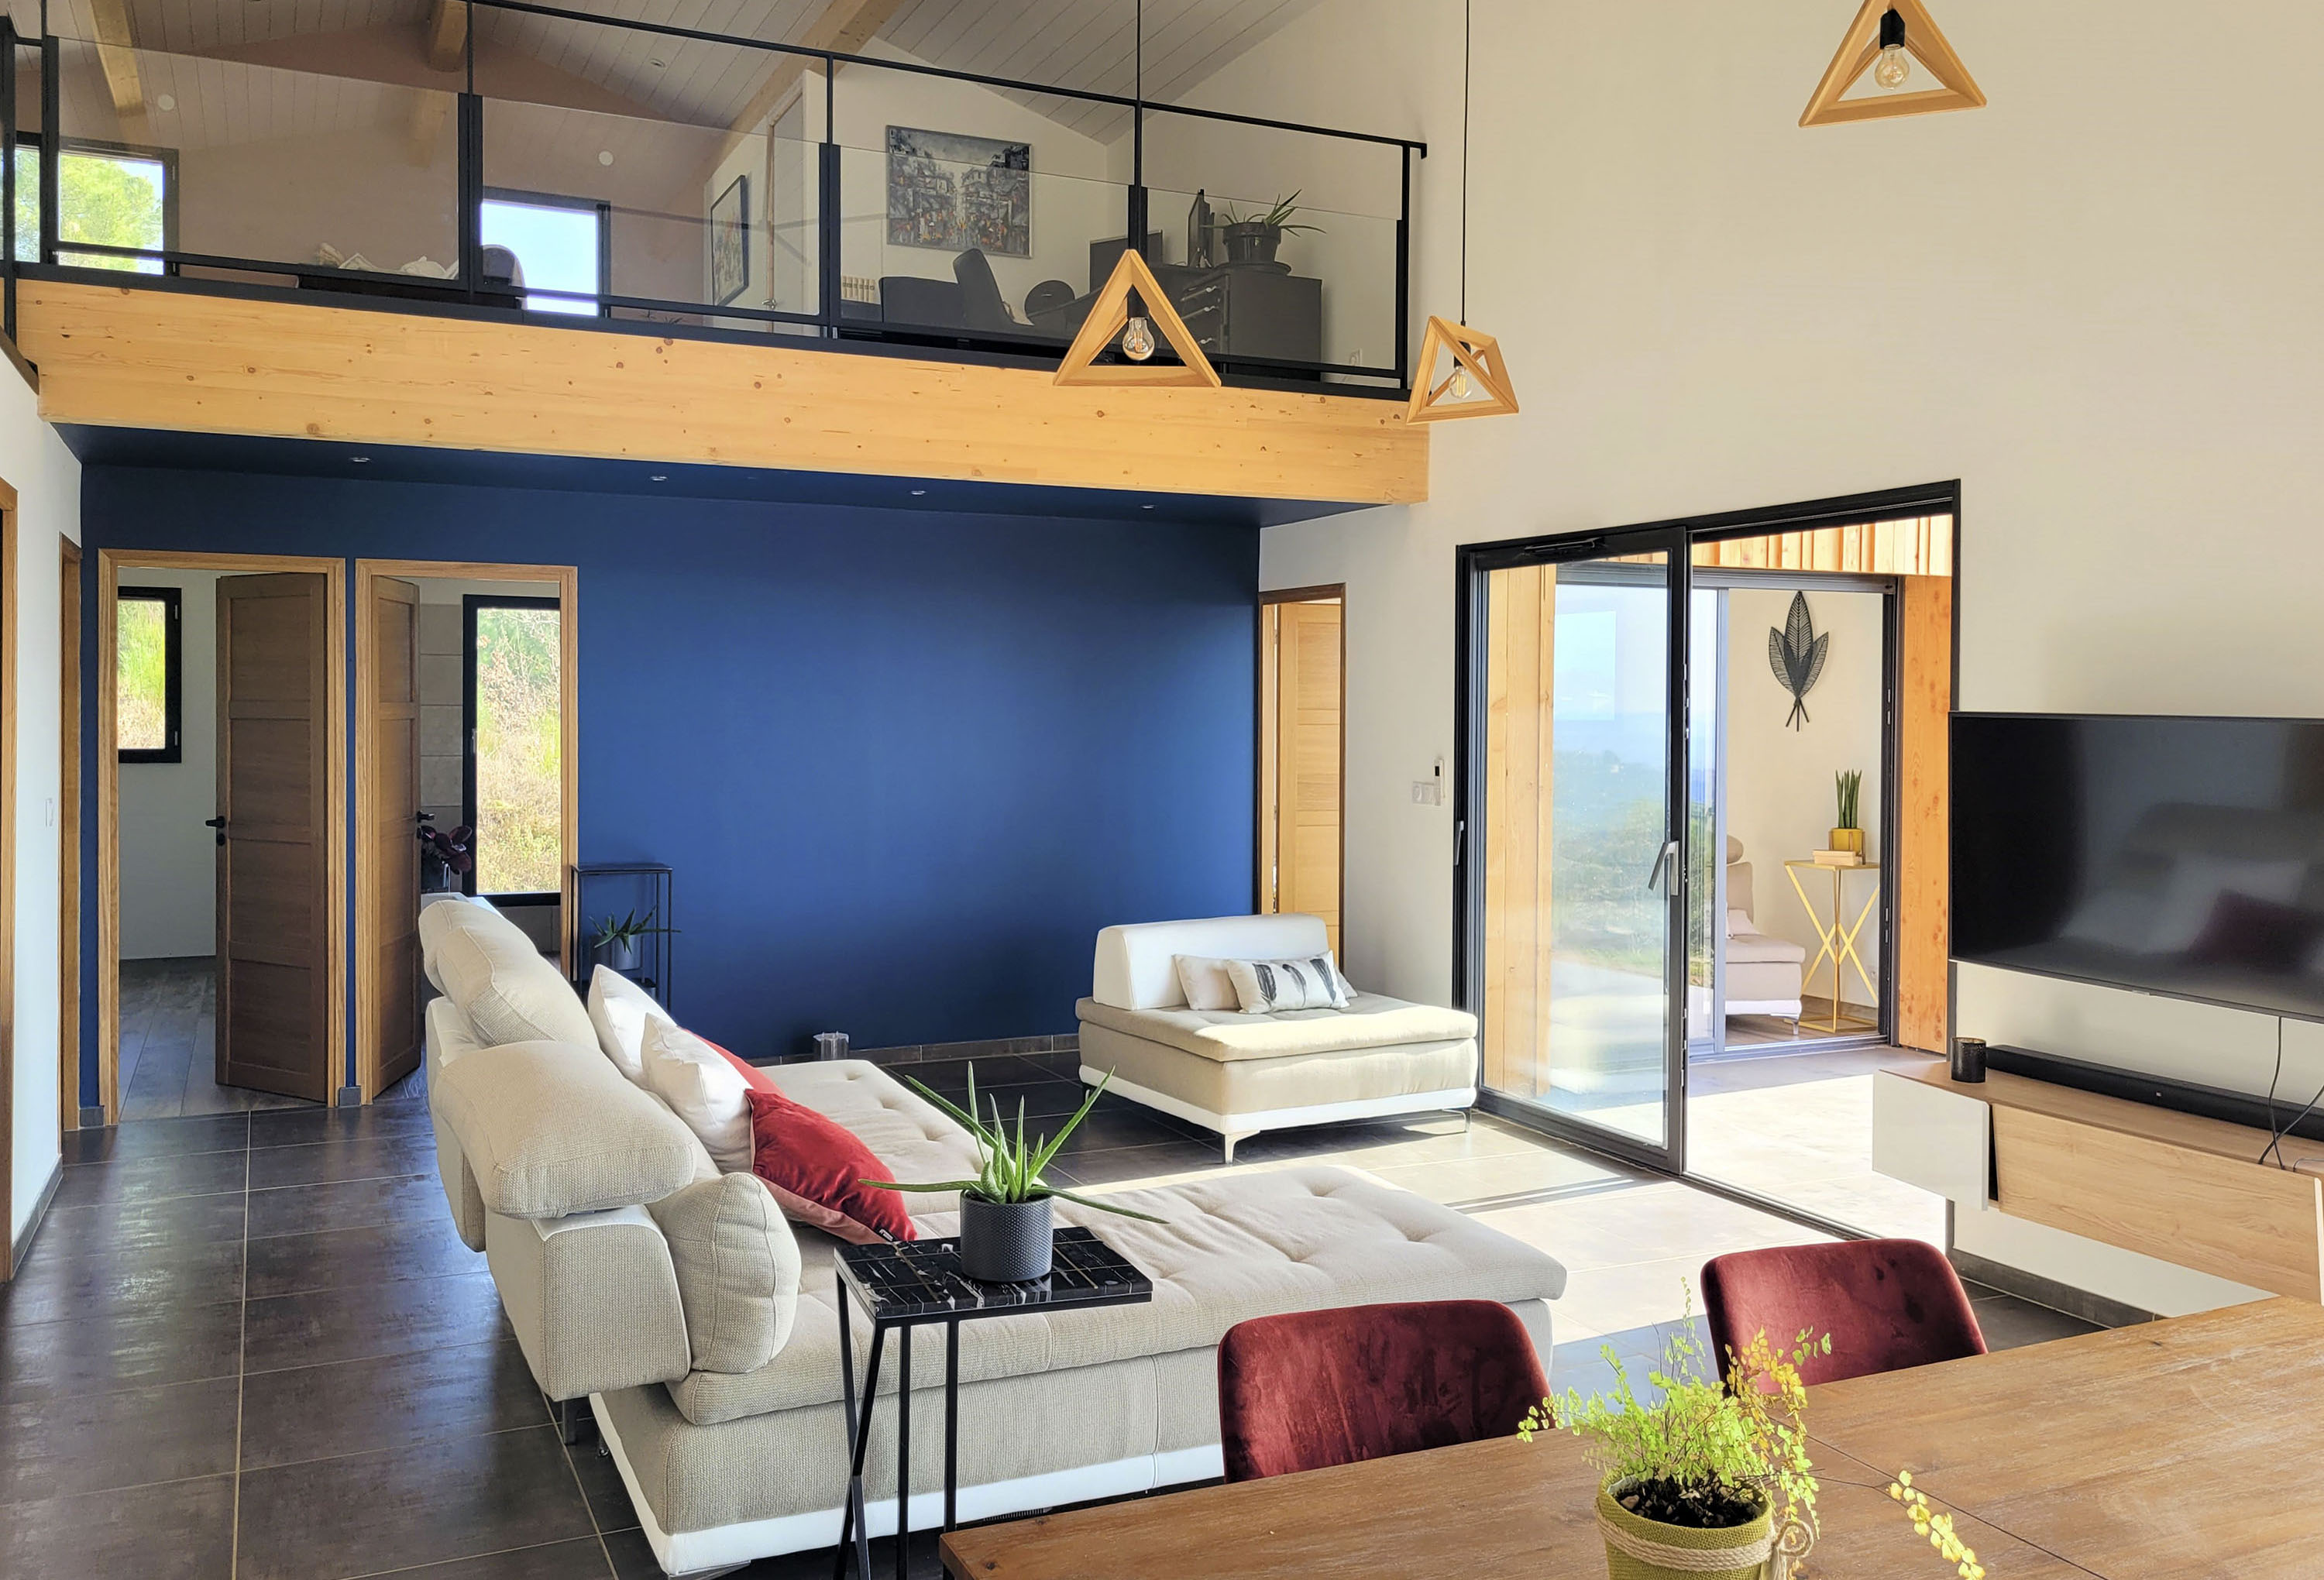 Villa-Celeste-salon-living-room